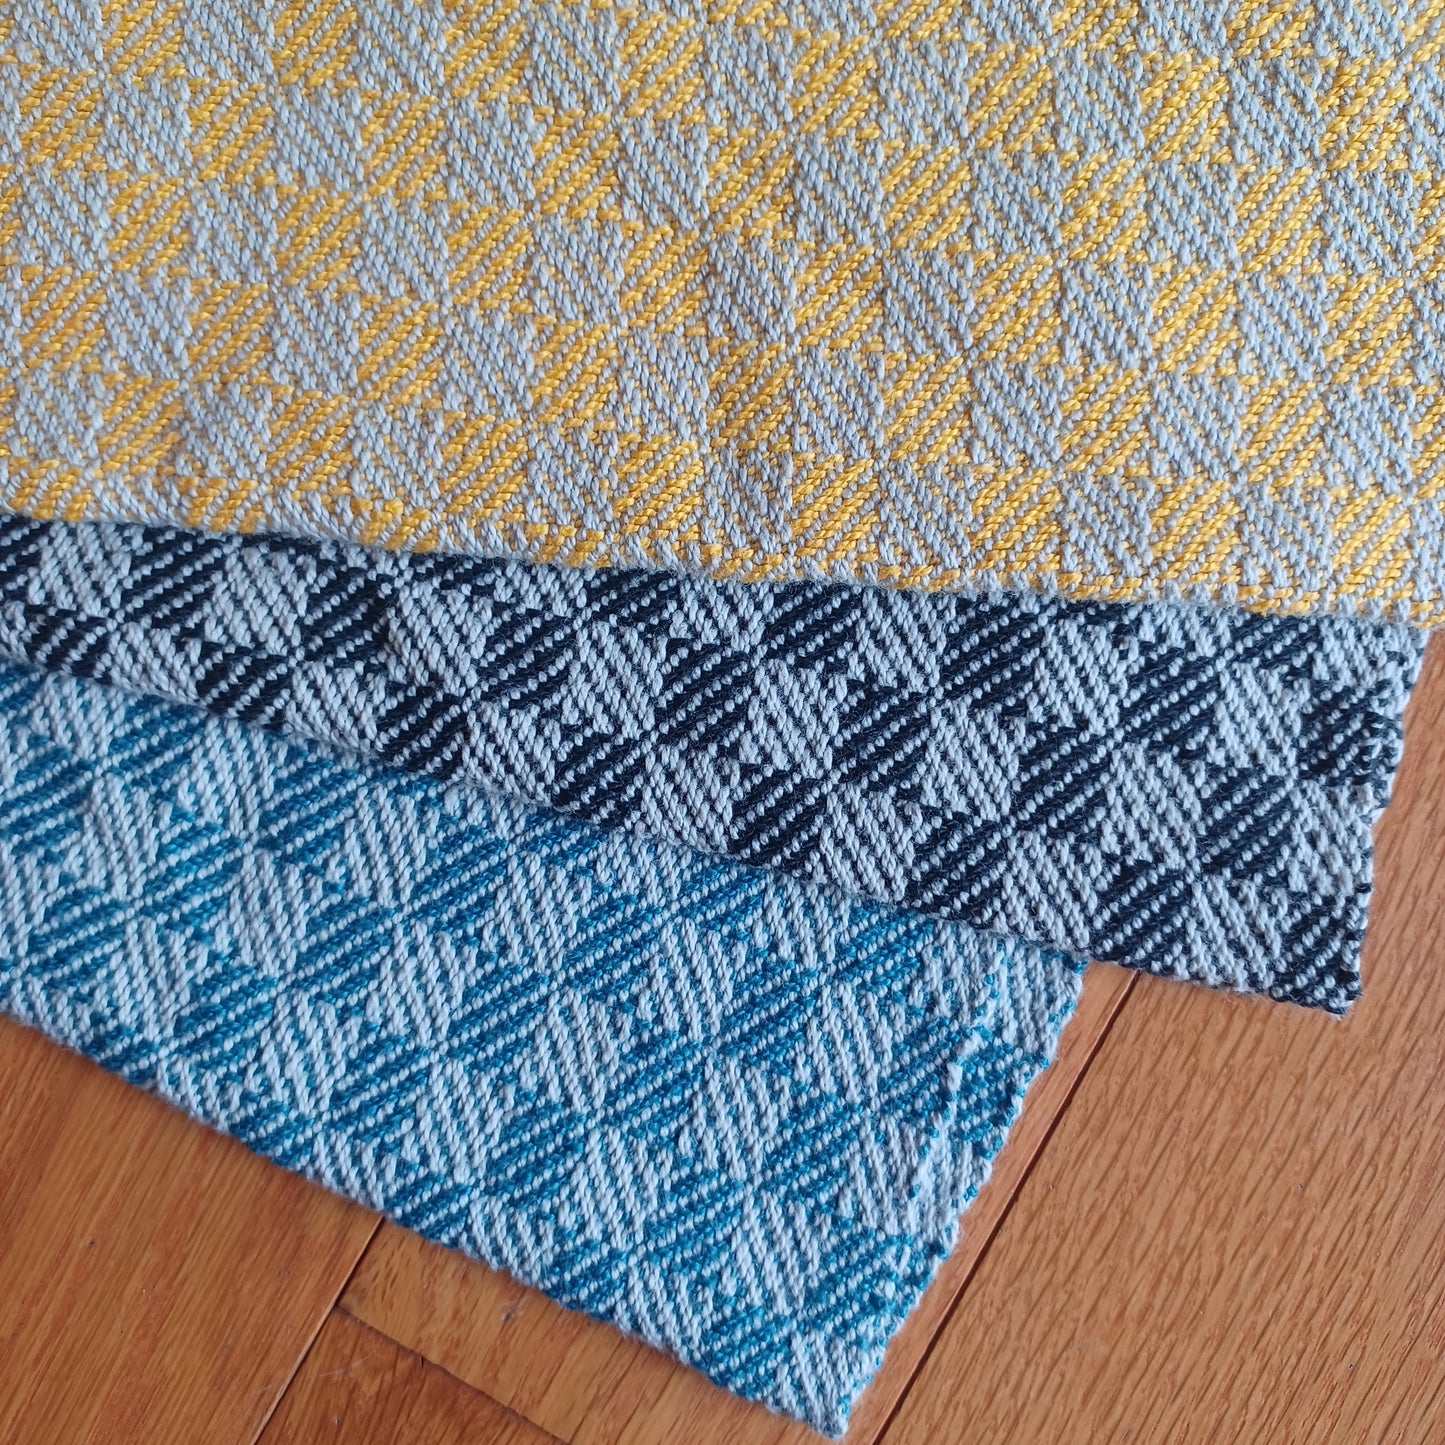 Checkerboard Pattern Dish Towels